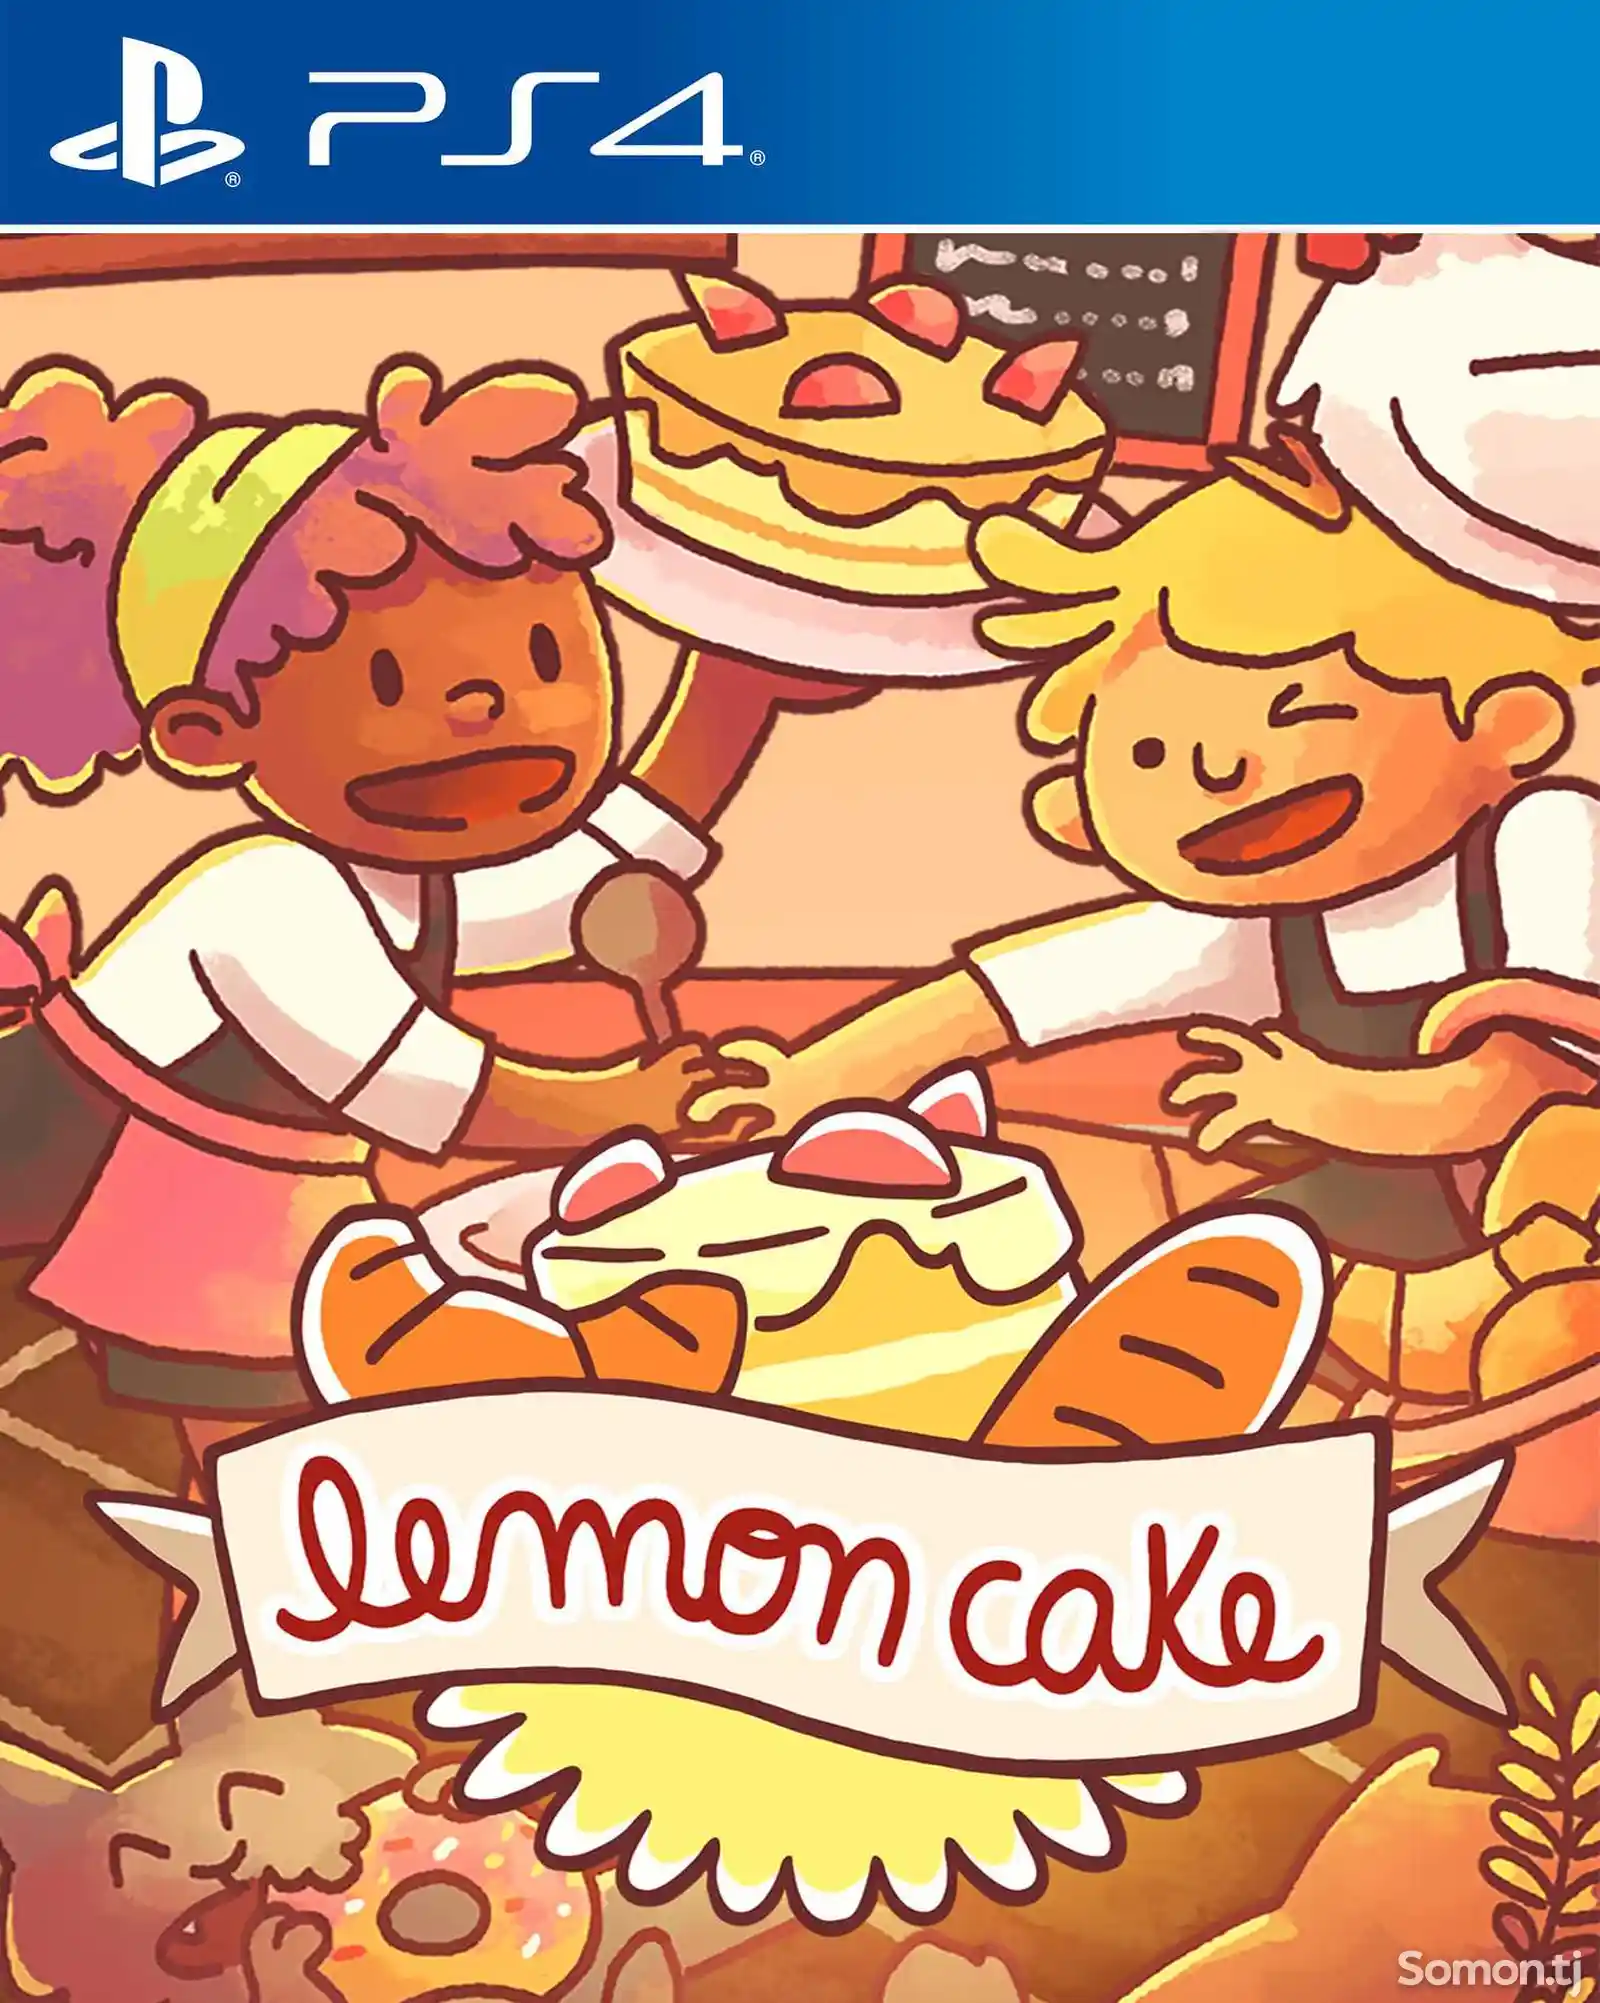 Игра Lemon cake для PS-4 / 5.05 / 6.72 / 7.02 / 7.55 / 9.00 /-1